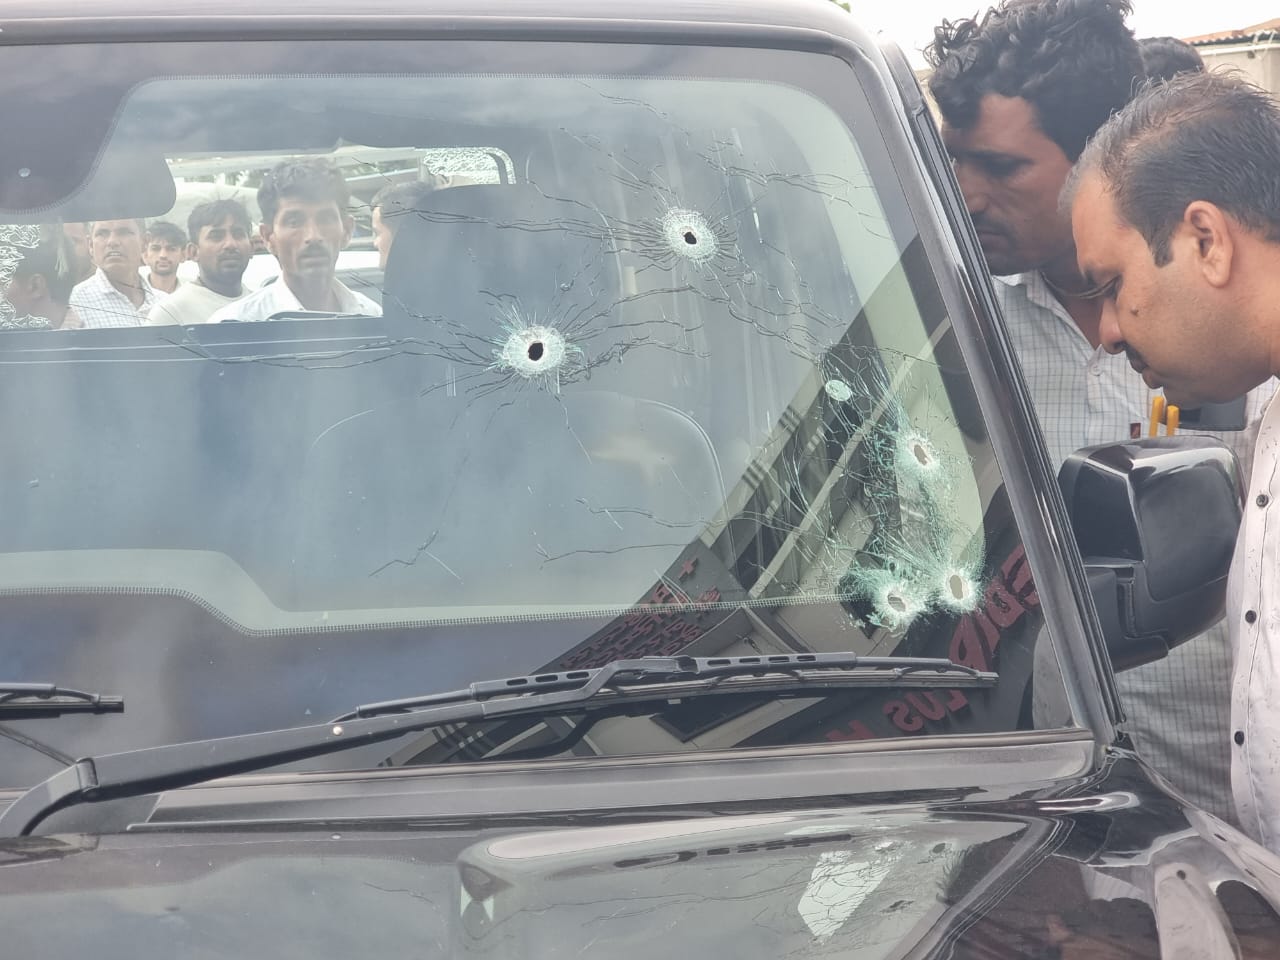 Laxman dewasi vehicle having shot marks